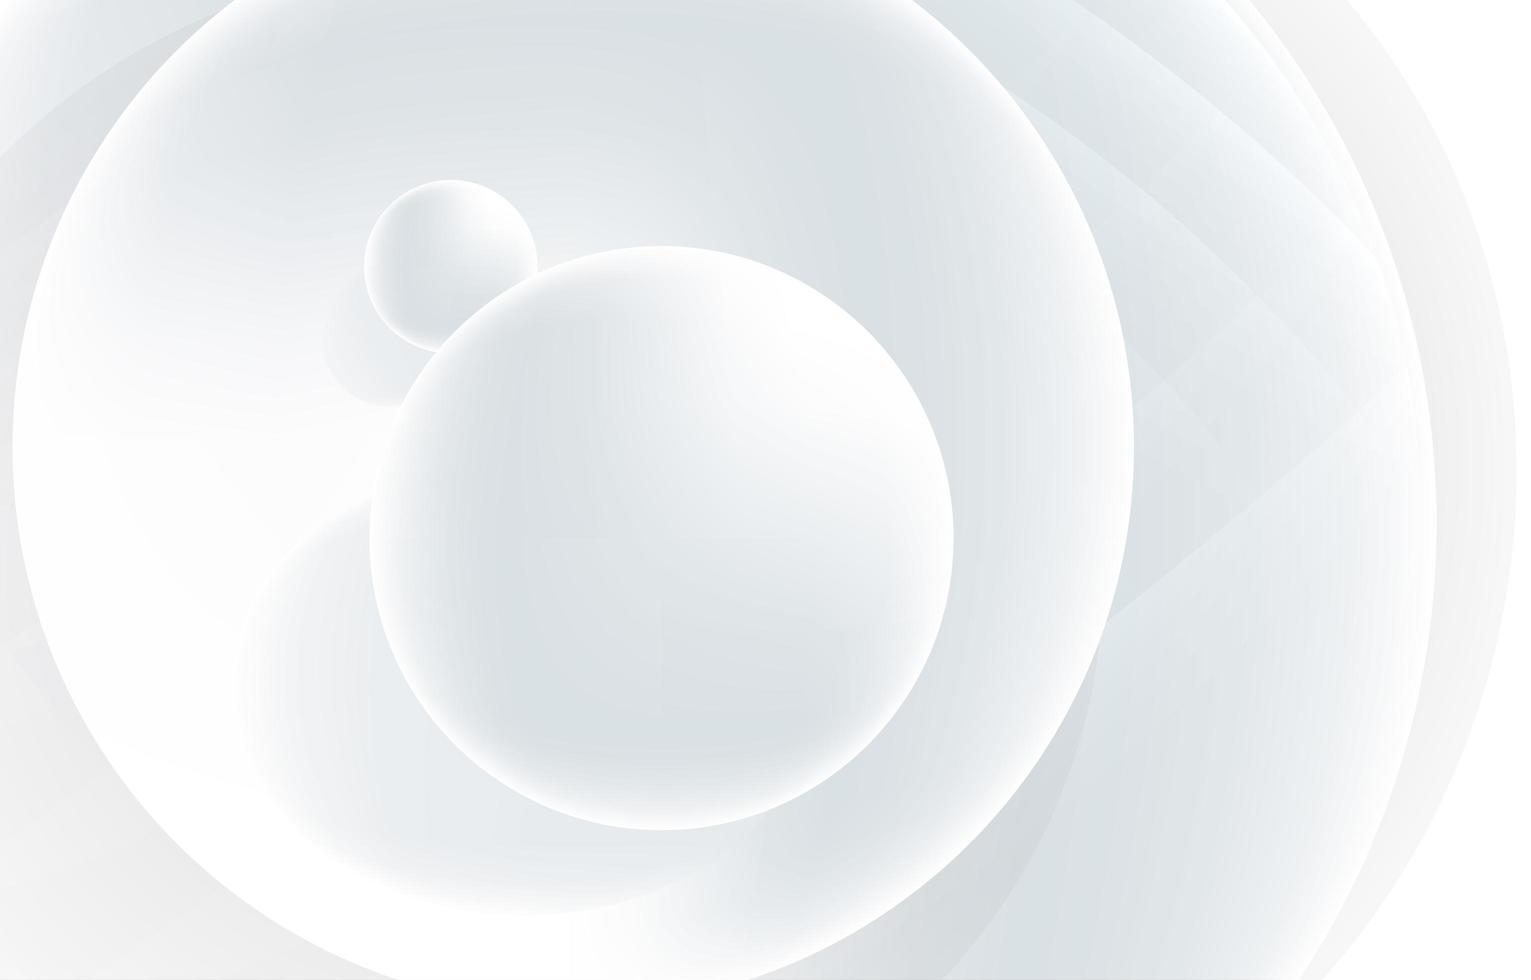 vit cirkel 3d koncept vektor